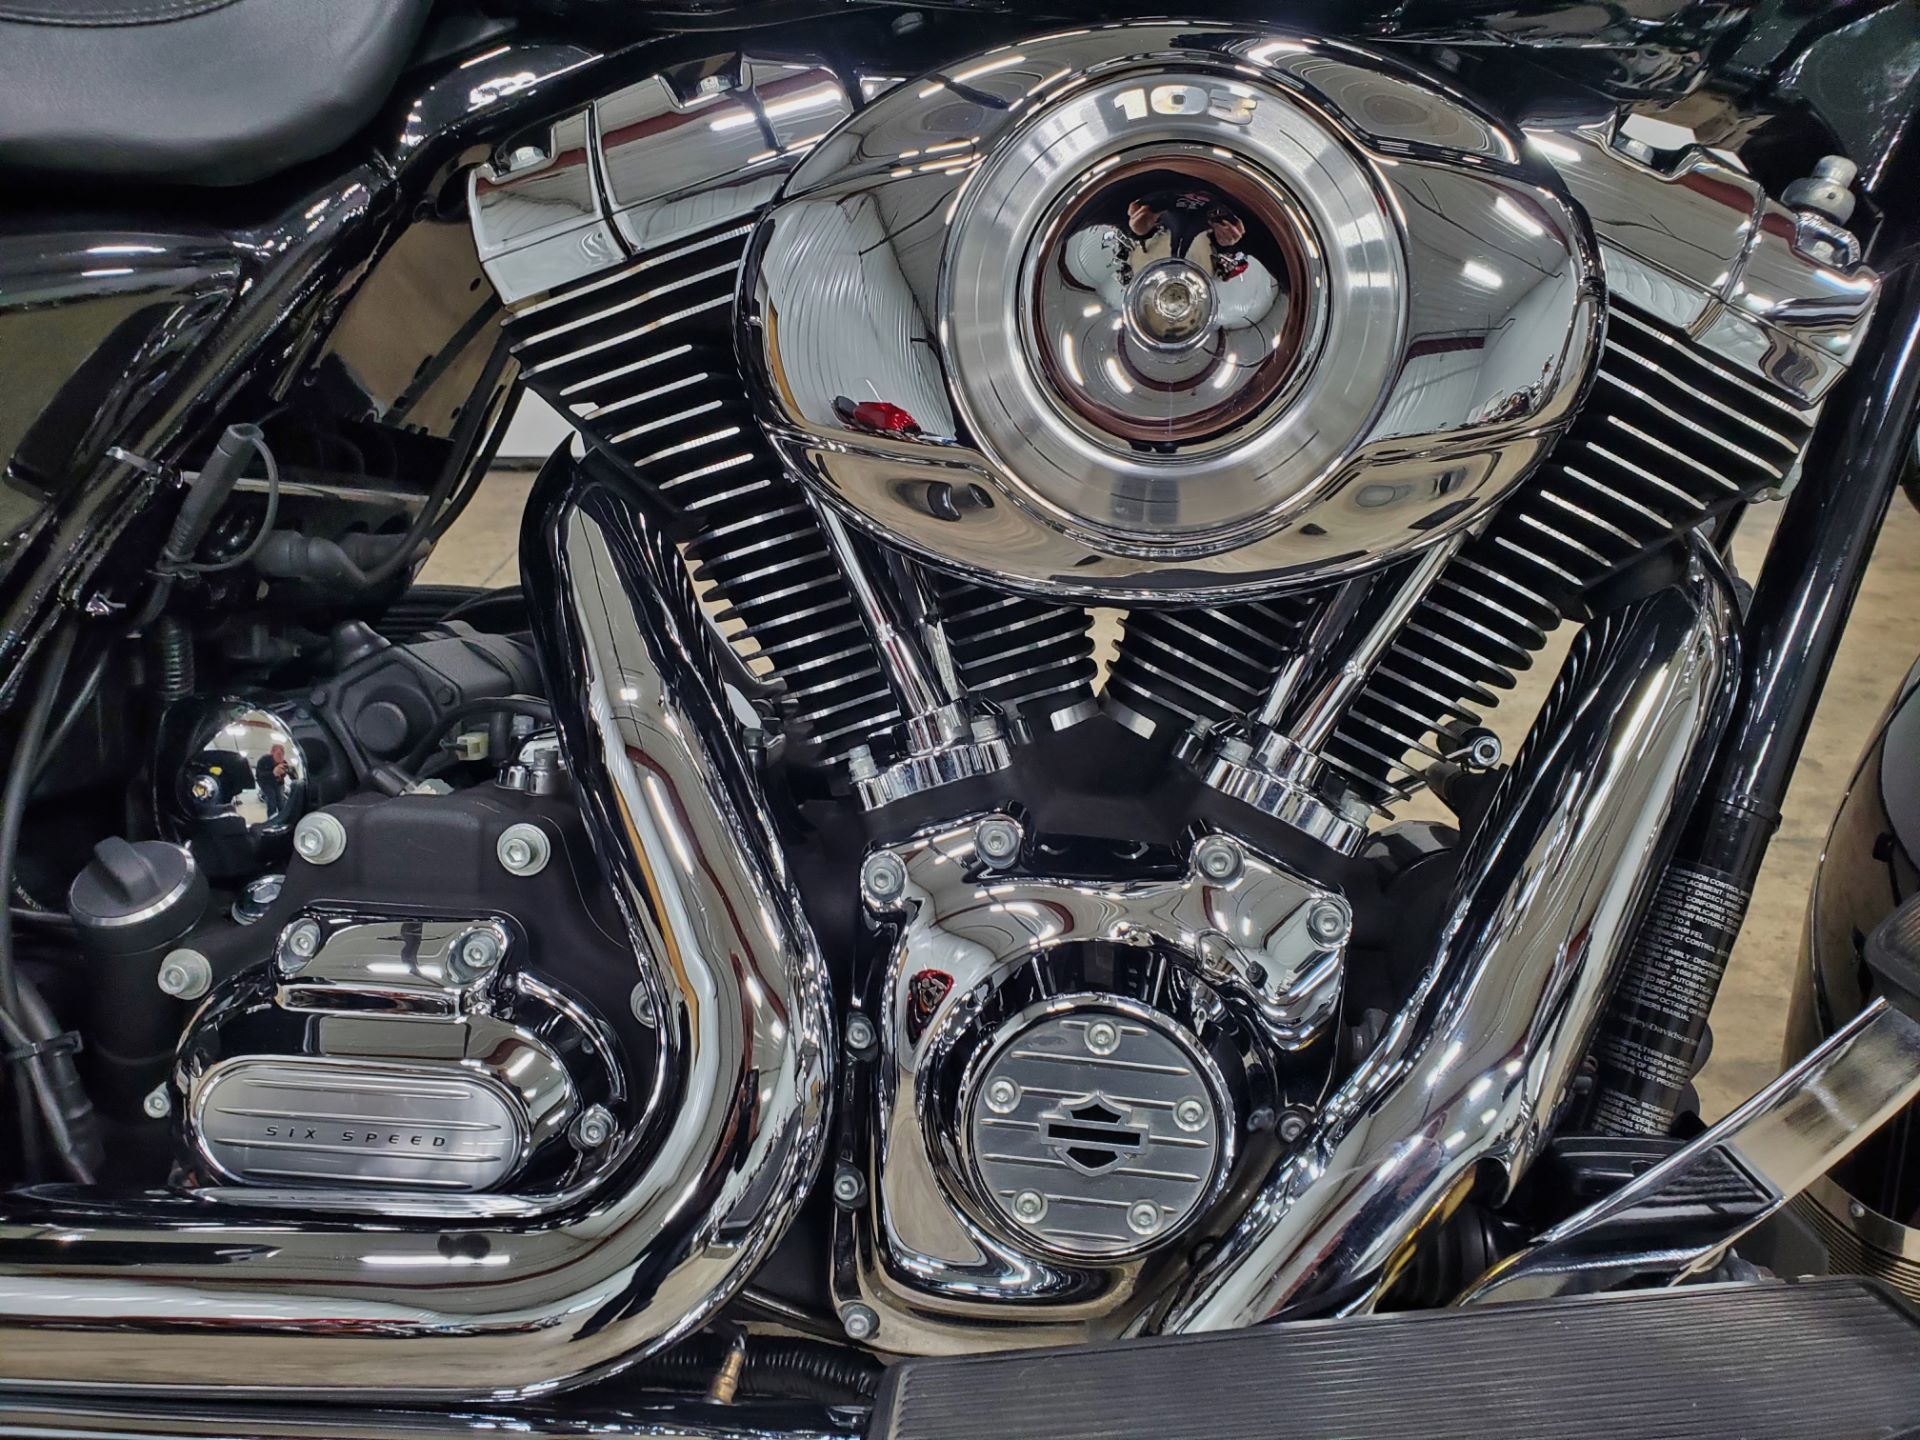 2013 Harley-Davidson Electra Glide® Classic in Sandusky, Ohio - Photo 2